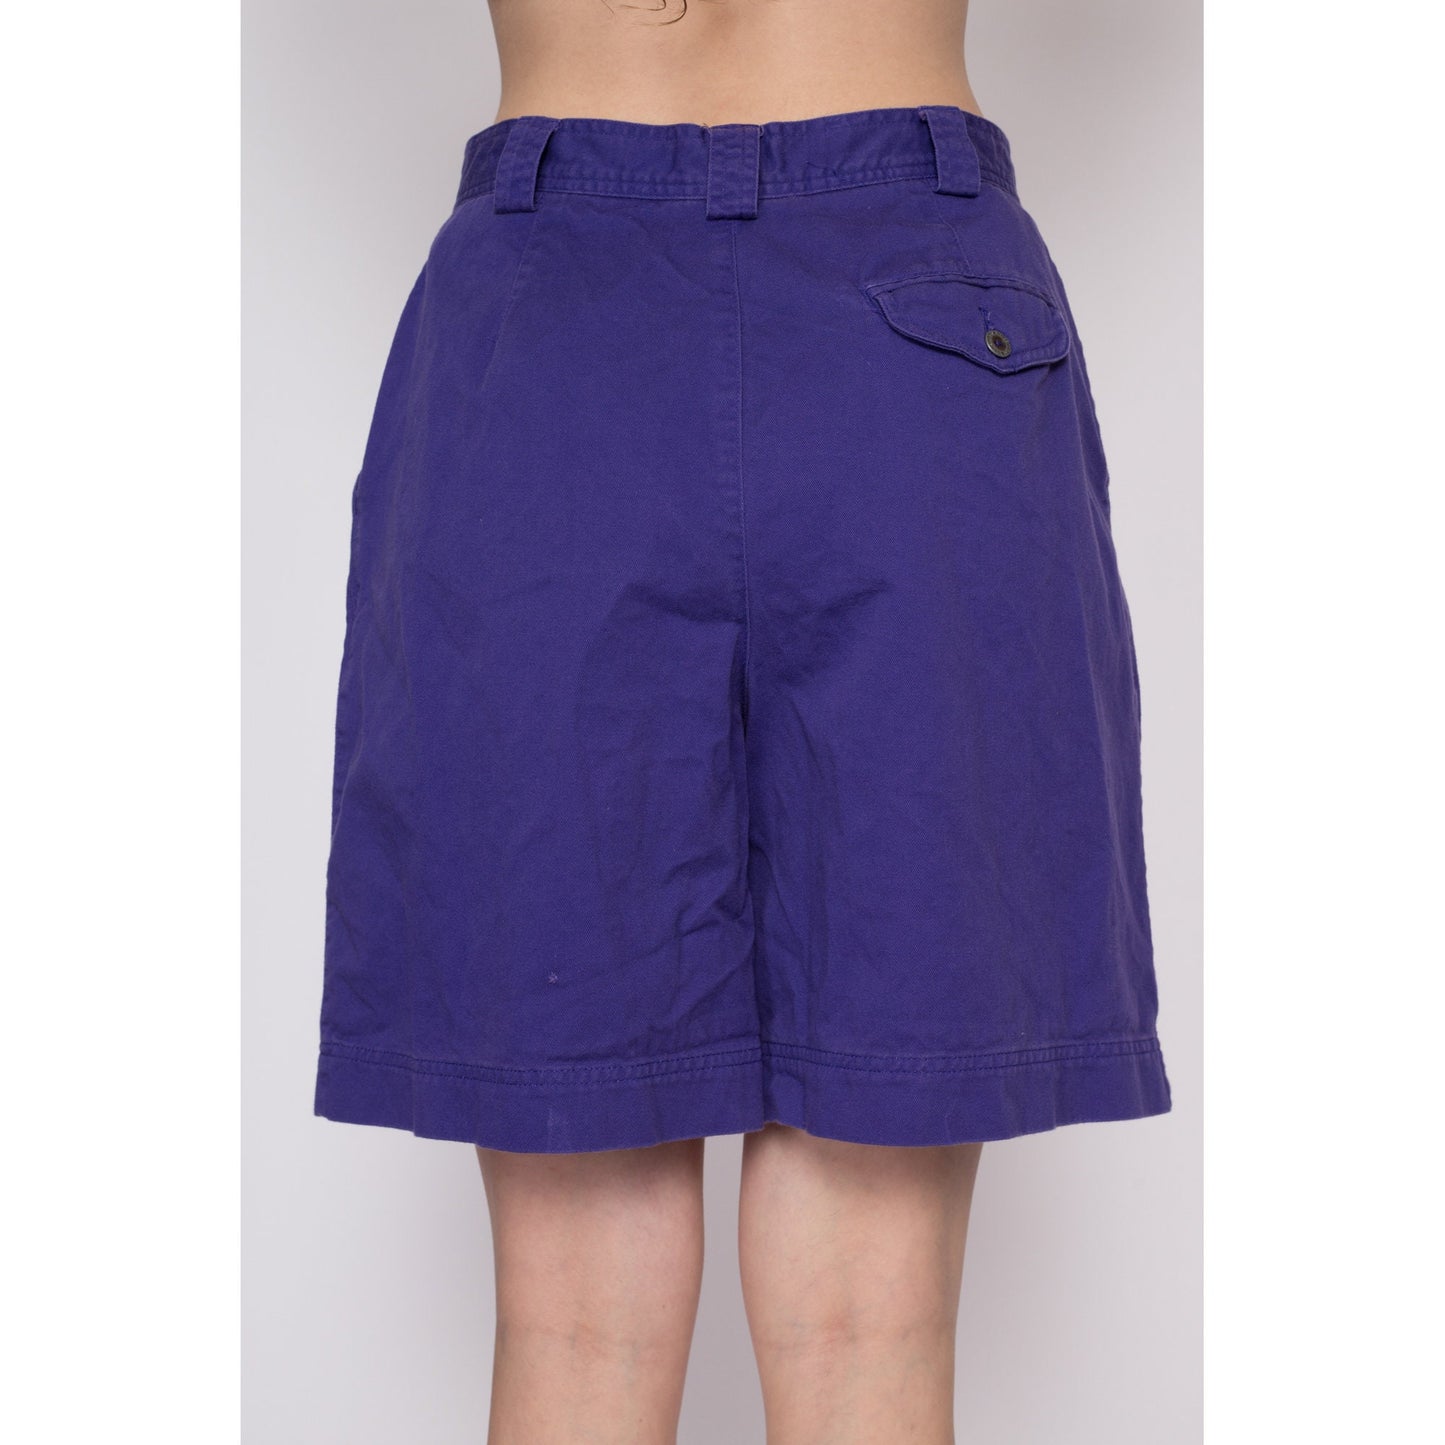 90s Lizwear Purple High Waisted Shorts - Medium to Large, 30" | Vintage Liz Claiborne Soft Cotton Casual Mom Shorts